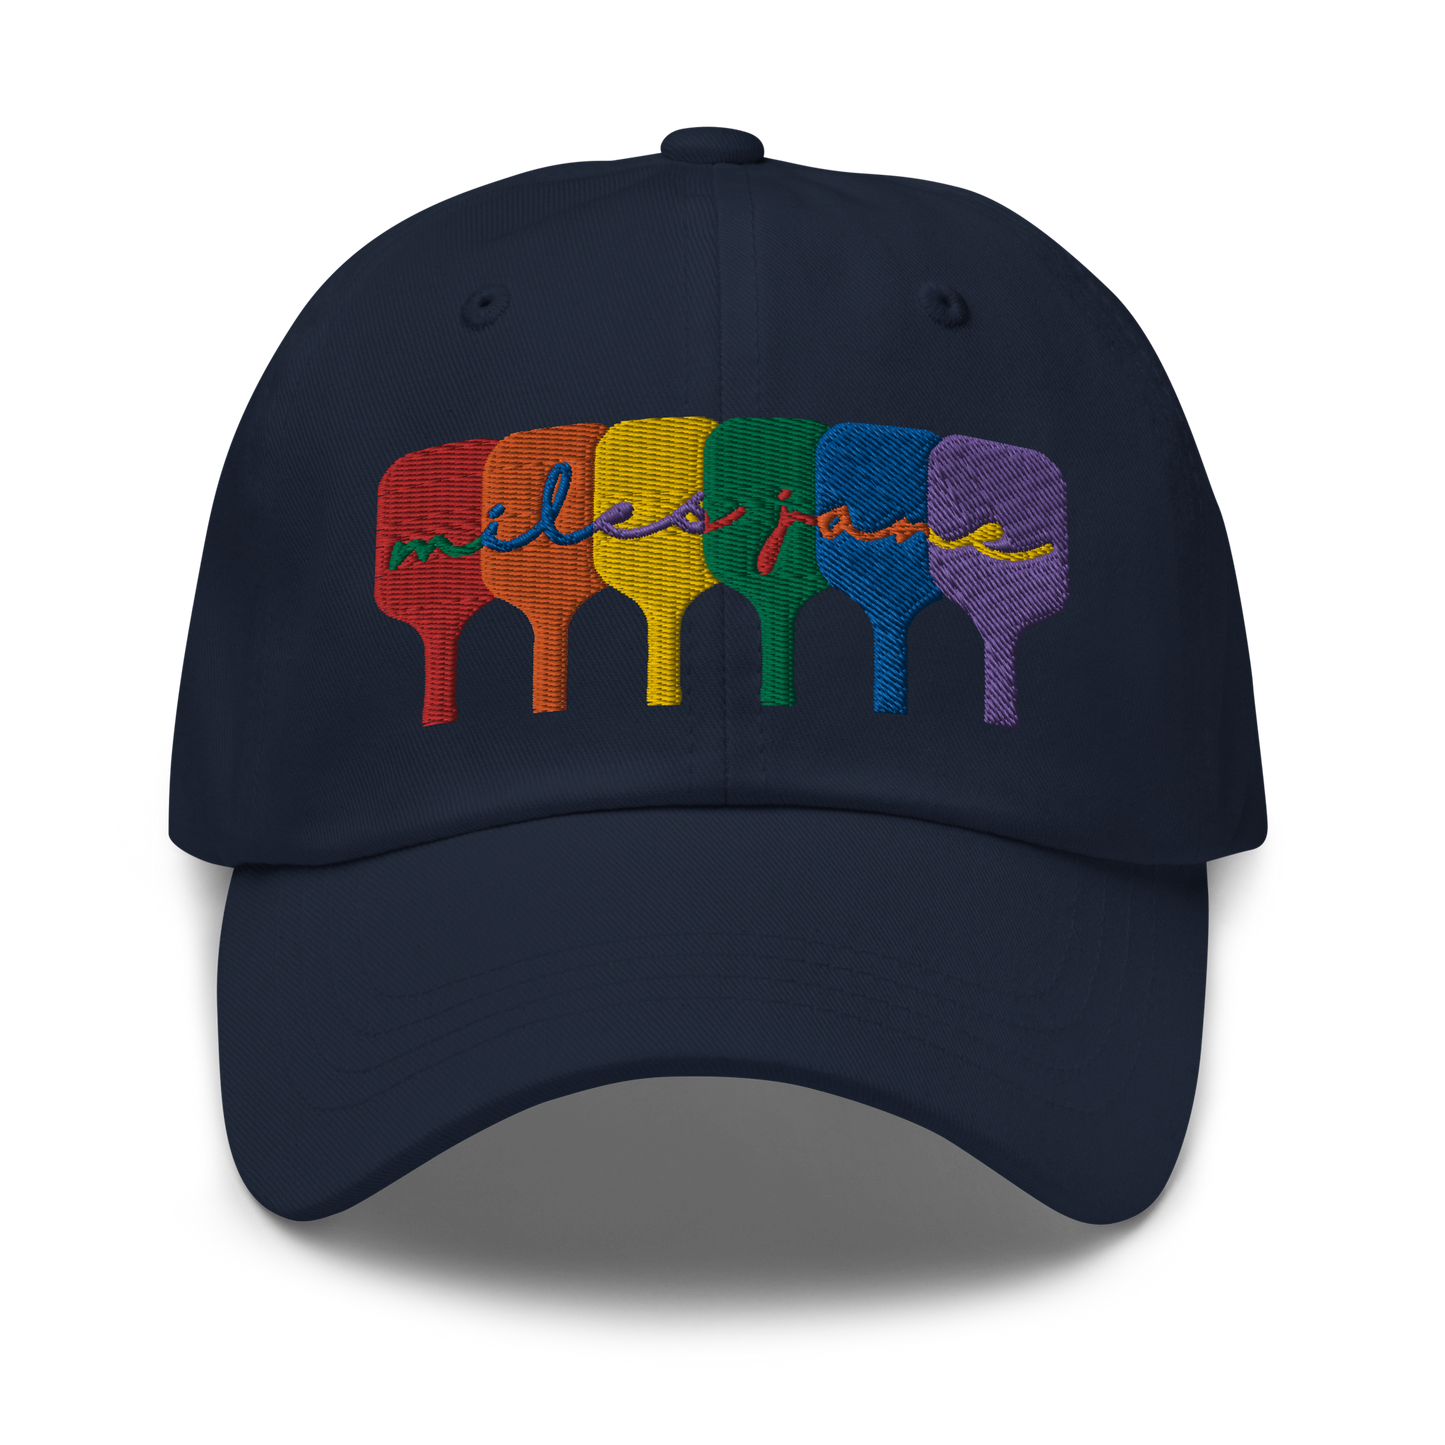 Pride Team Paddles - The Classics Hat - MJ1034